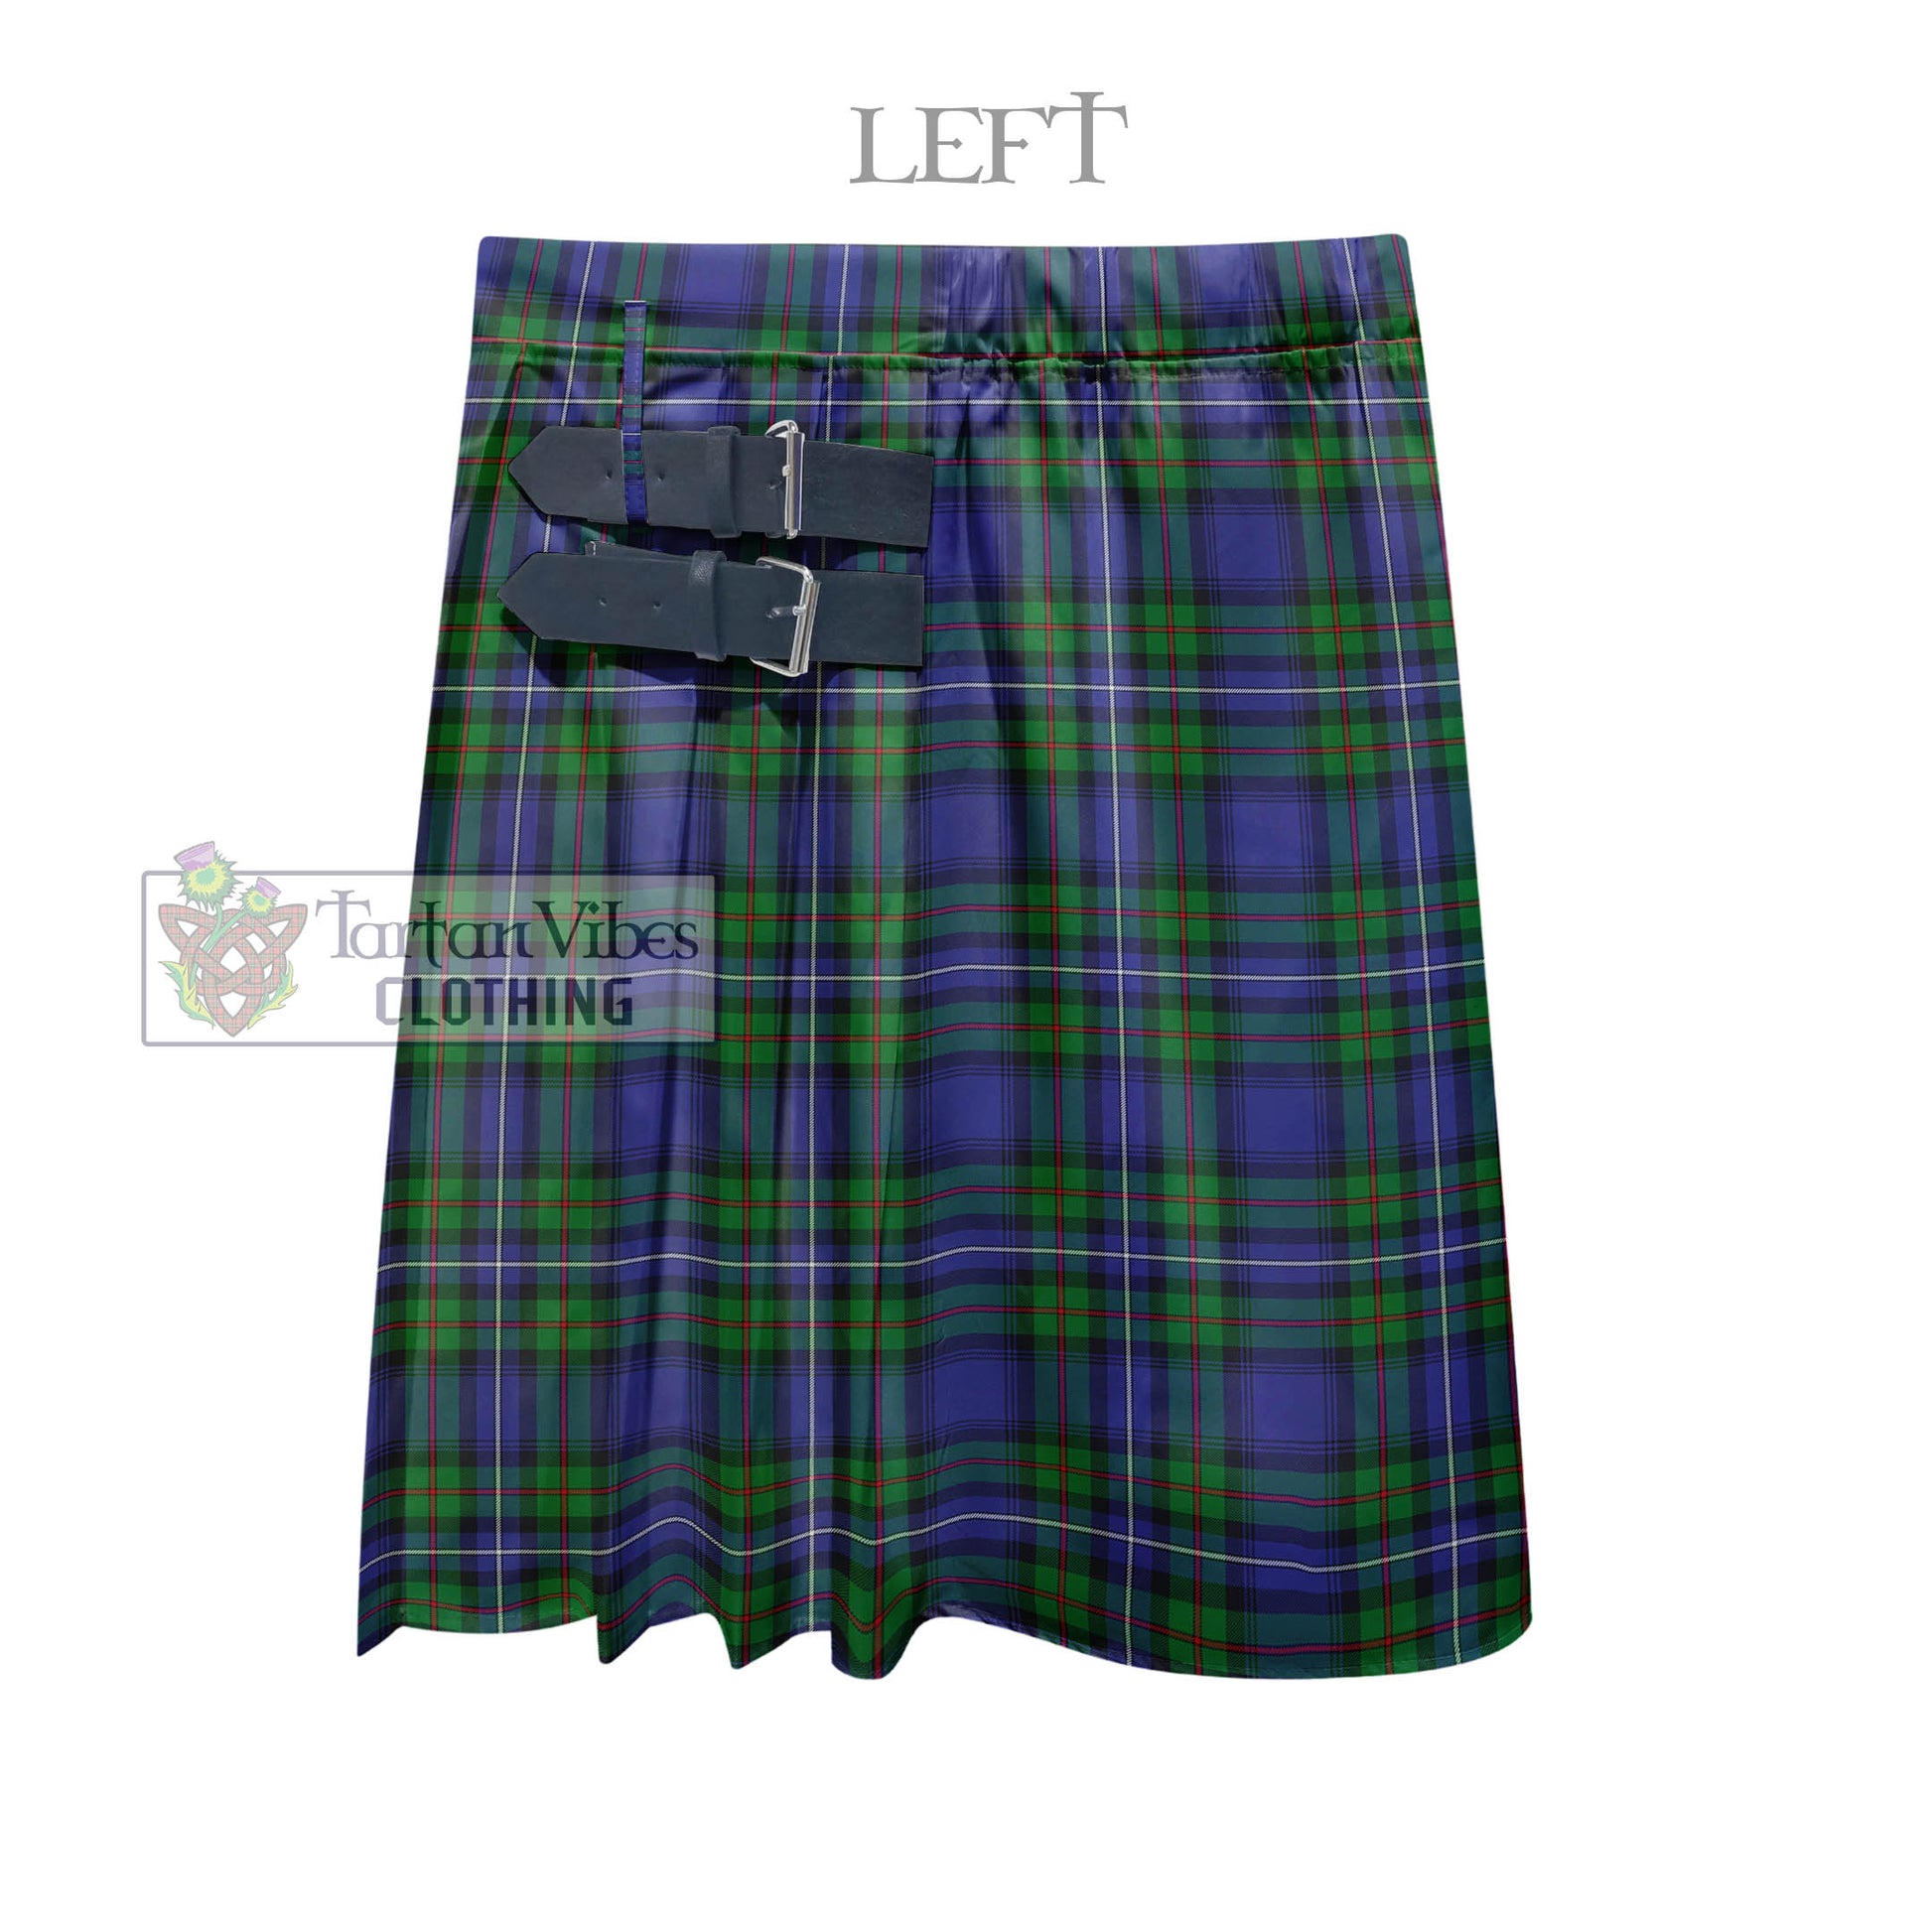 Tartan Vibes Clothing Robertson Hunting Modern Tartan Men's Pleated Skirt - Fashion Casual Retro Scottish Style